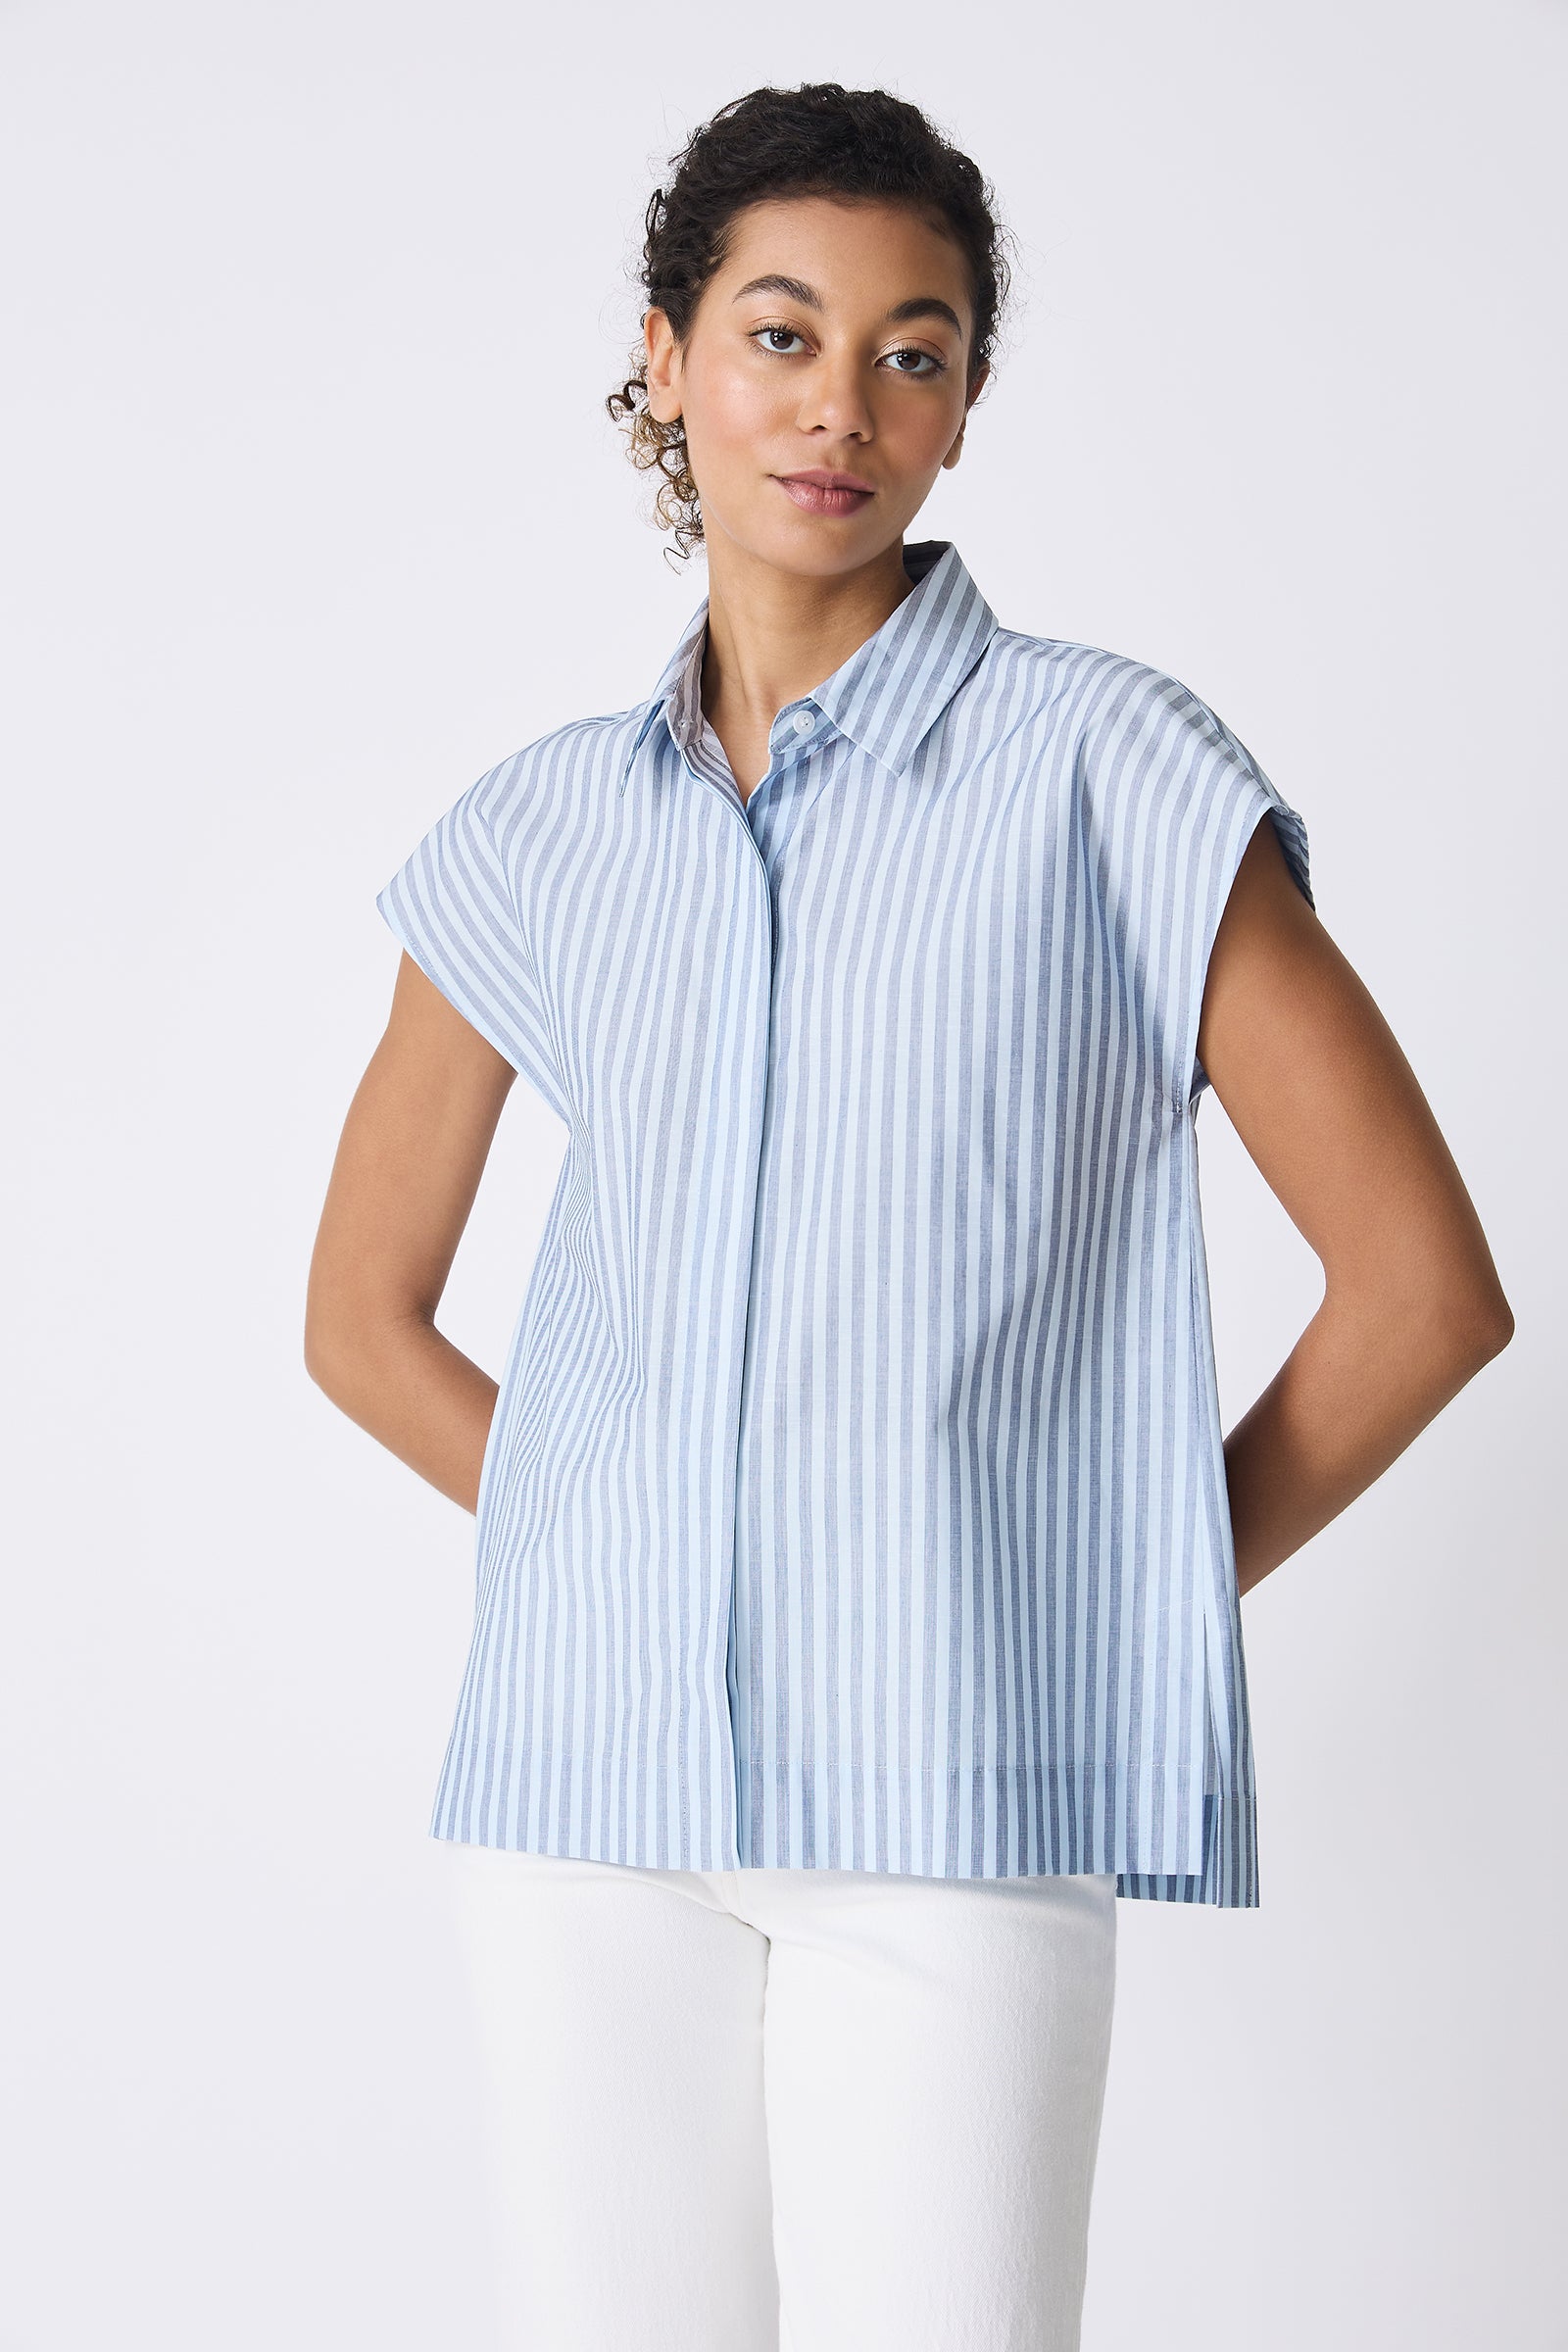 Kal Rieman Jane Cap Sleeve Shirt in Cabana Stripe Blue on model front view